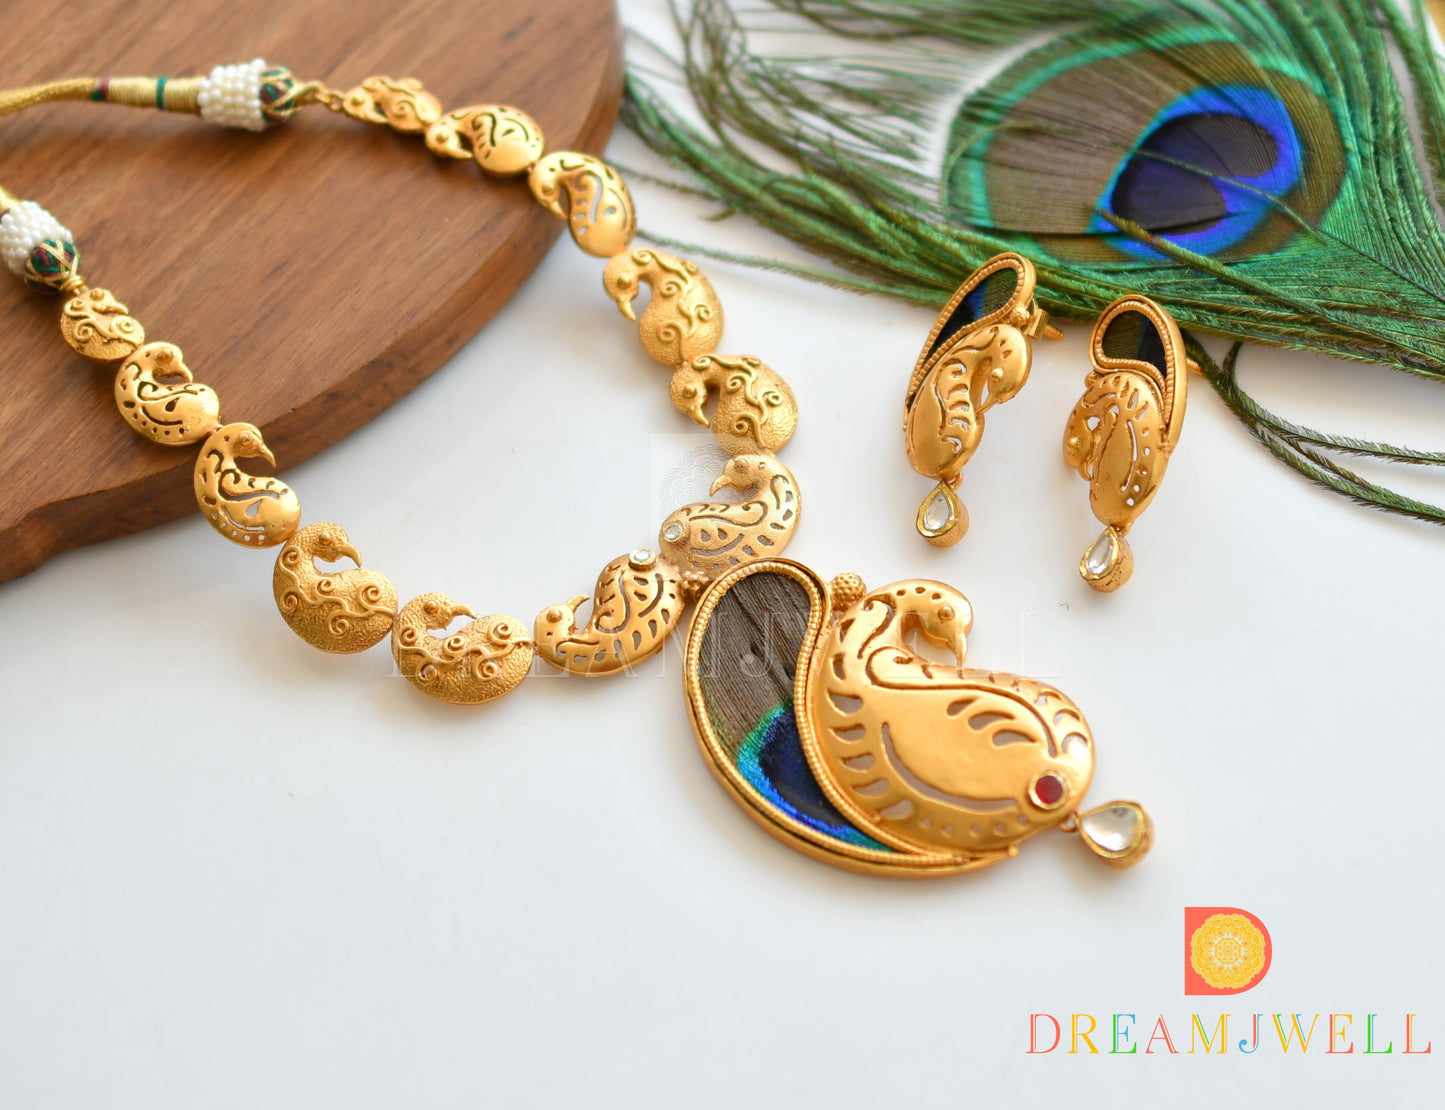 Gold Replica design Peacock Feather Necklace Set dj-05404